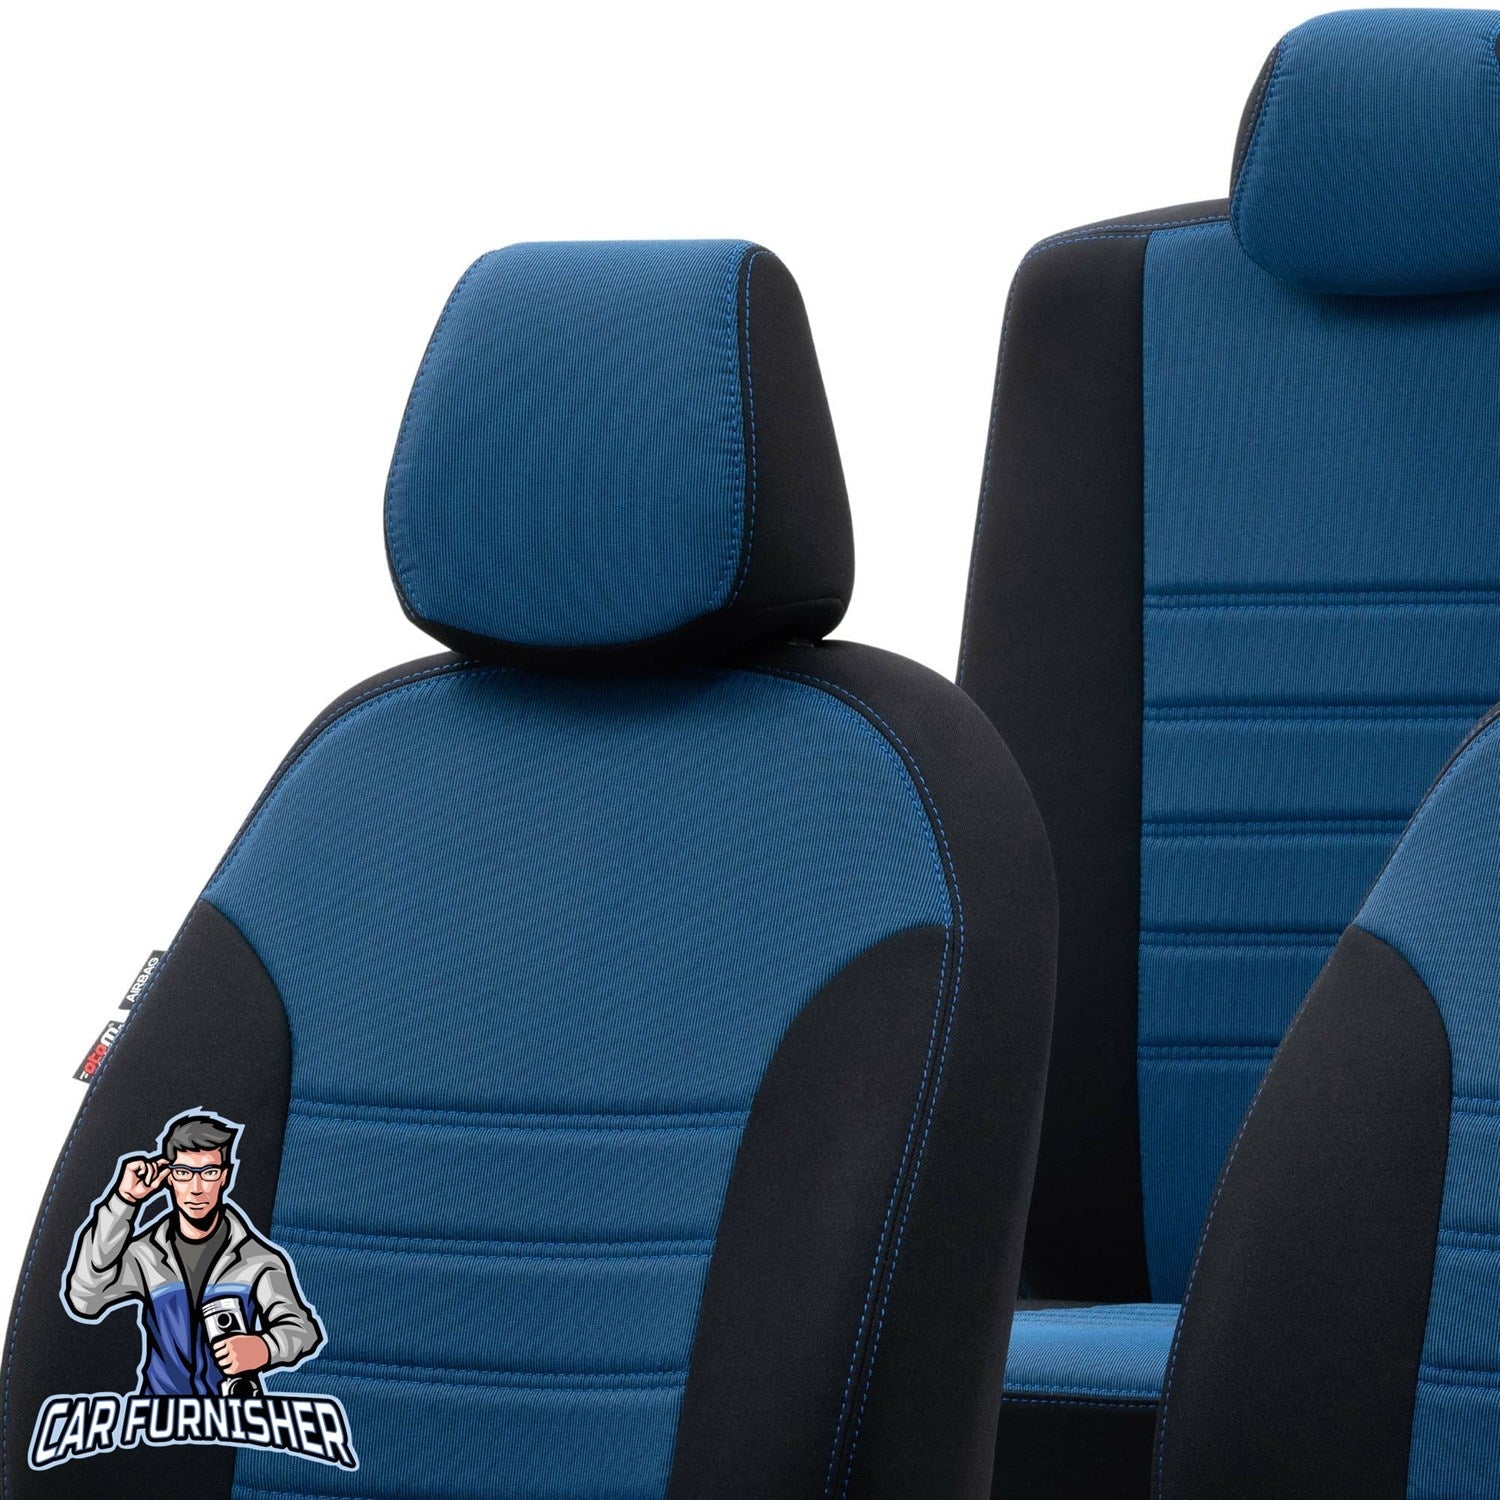 Mitsubishi Canter Seat Covers Original Jacquard Design Blue Jacquard Fabric